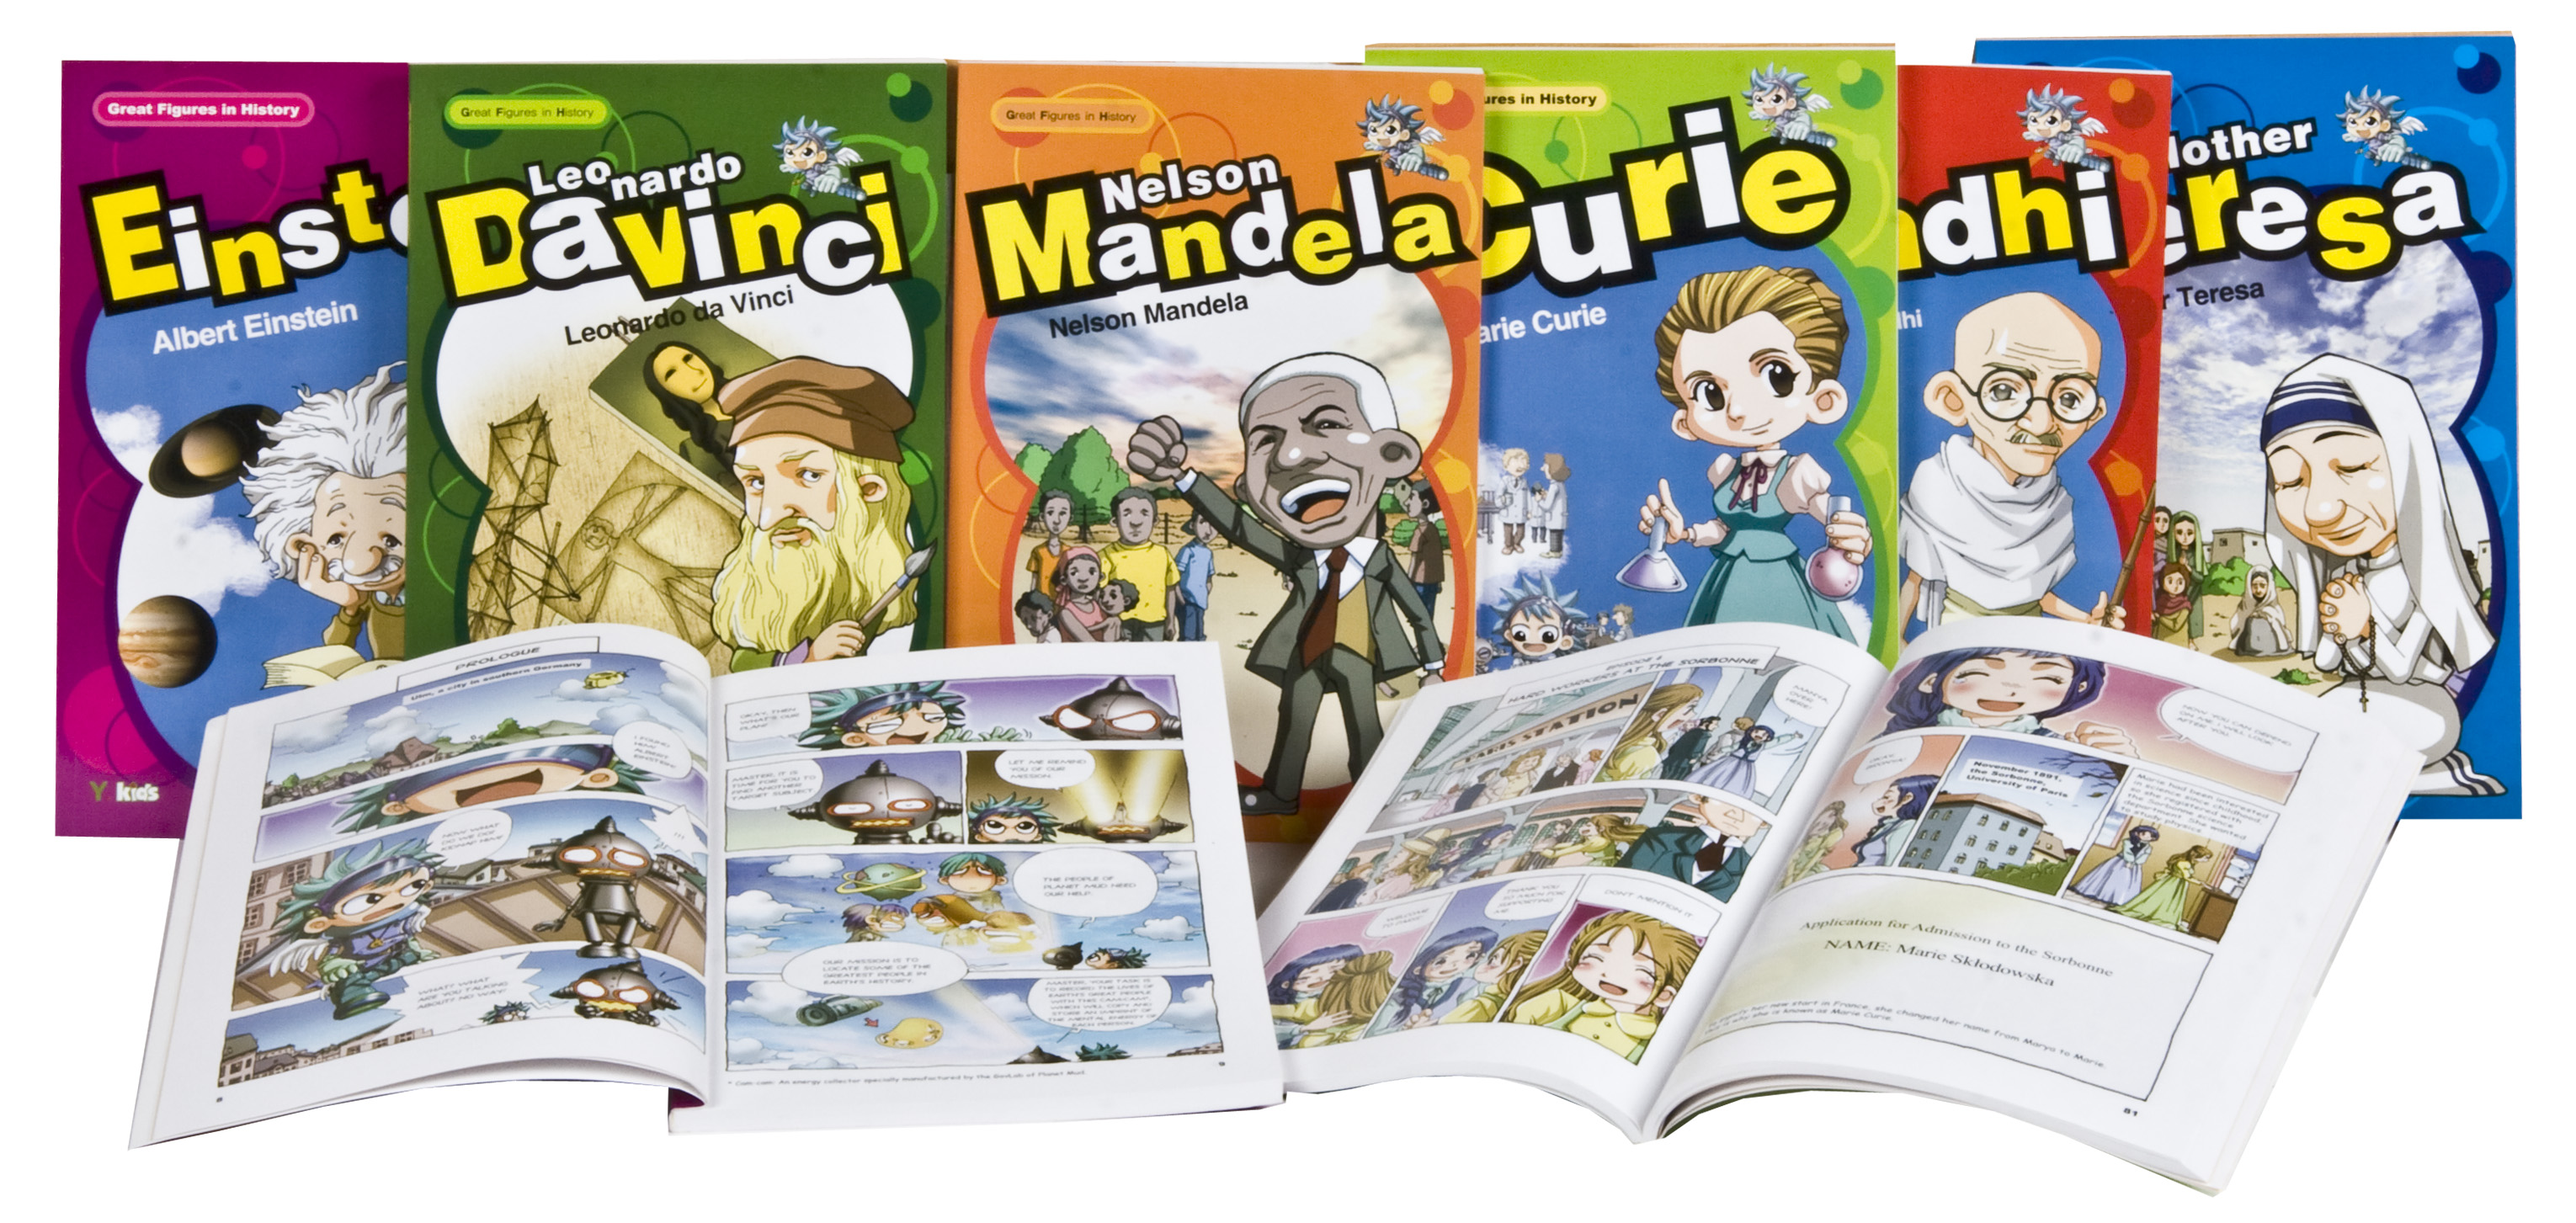 manga biographies library